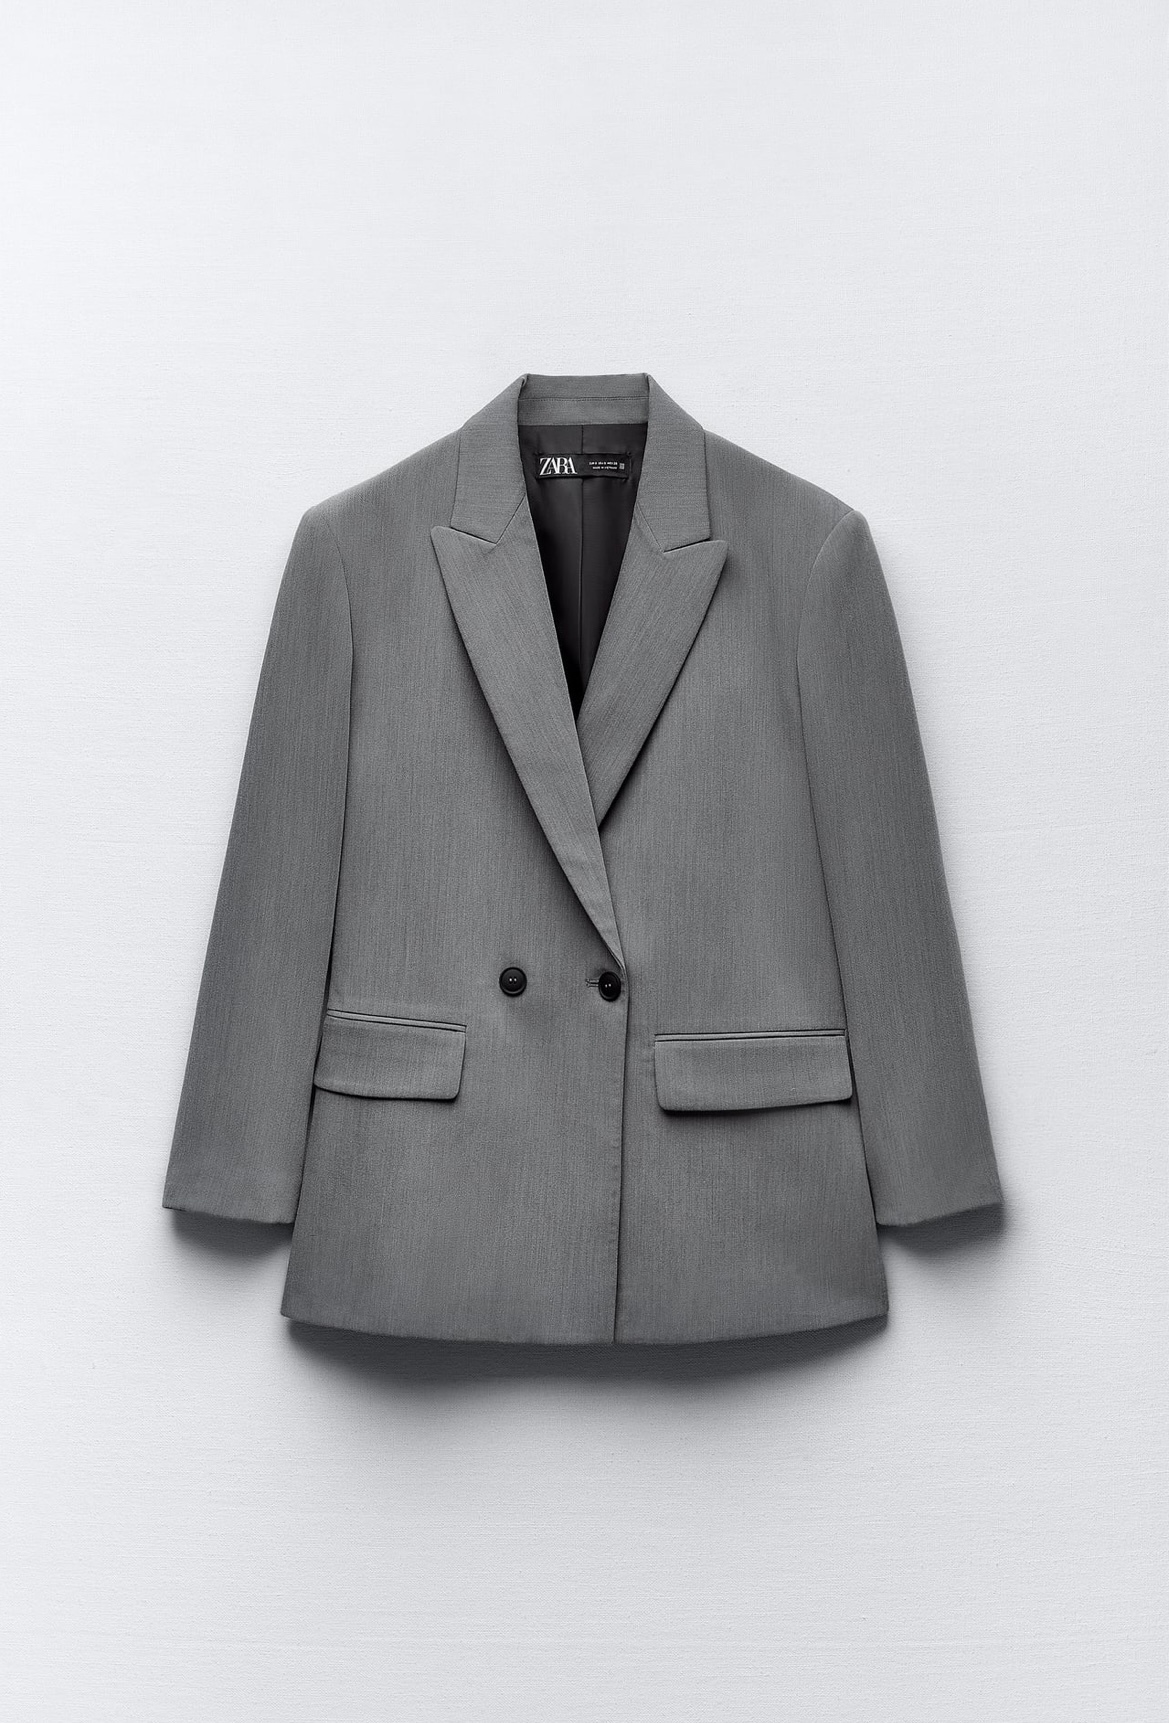 Blazer oversize de Zara (39,95 euros).